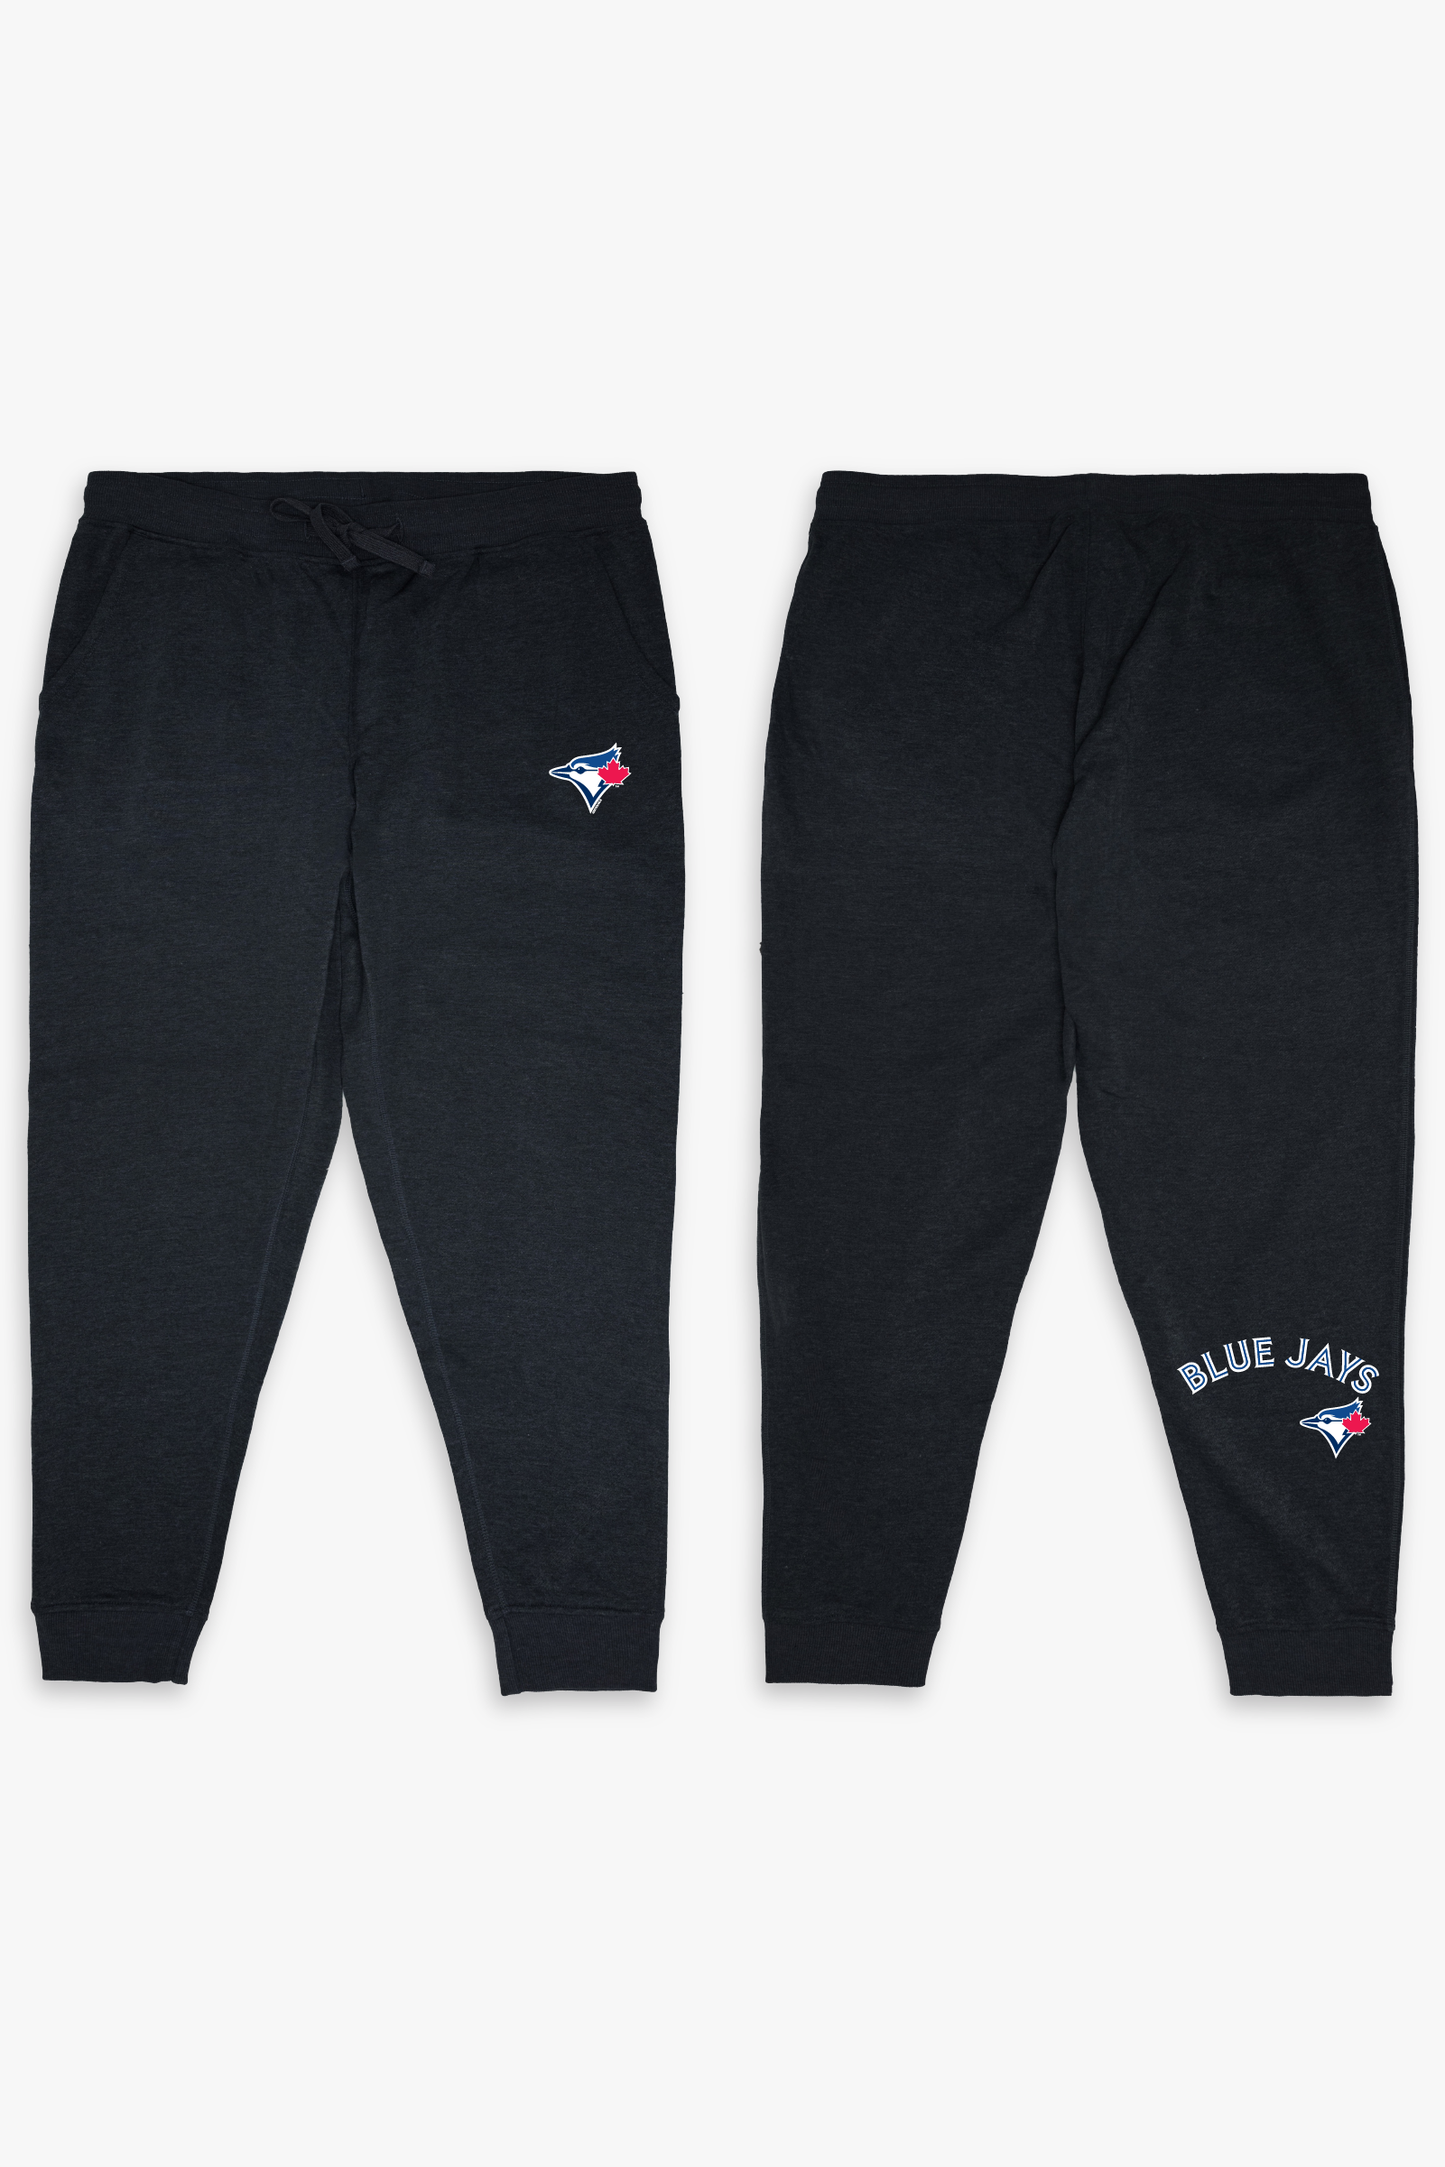 MLB Toronto Blue Jays Dark Grey Adult Lounge Pants